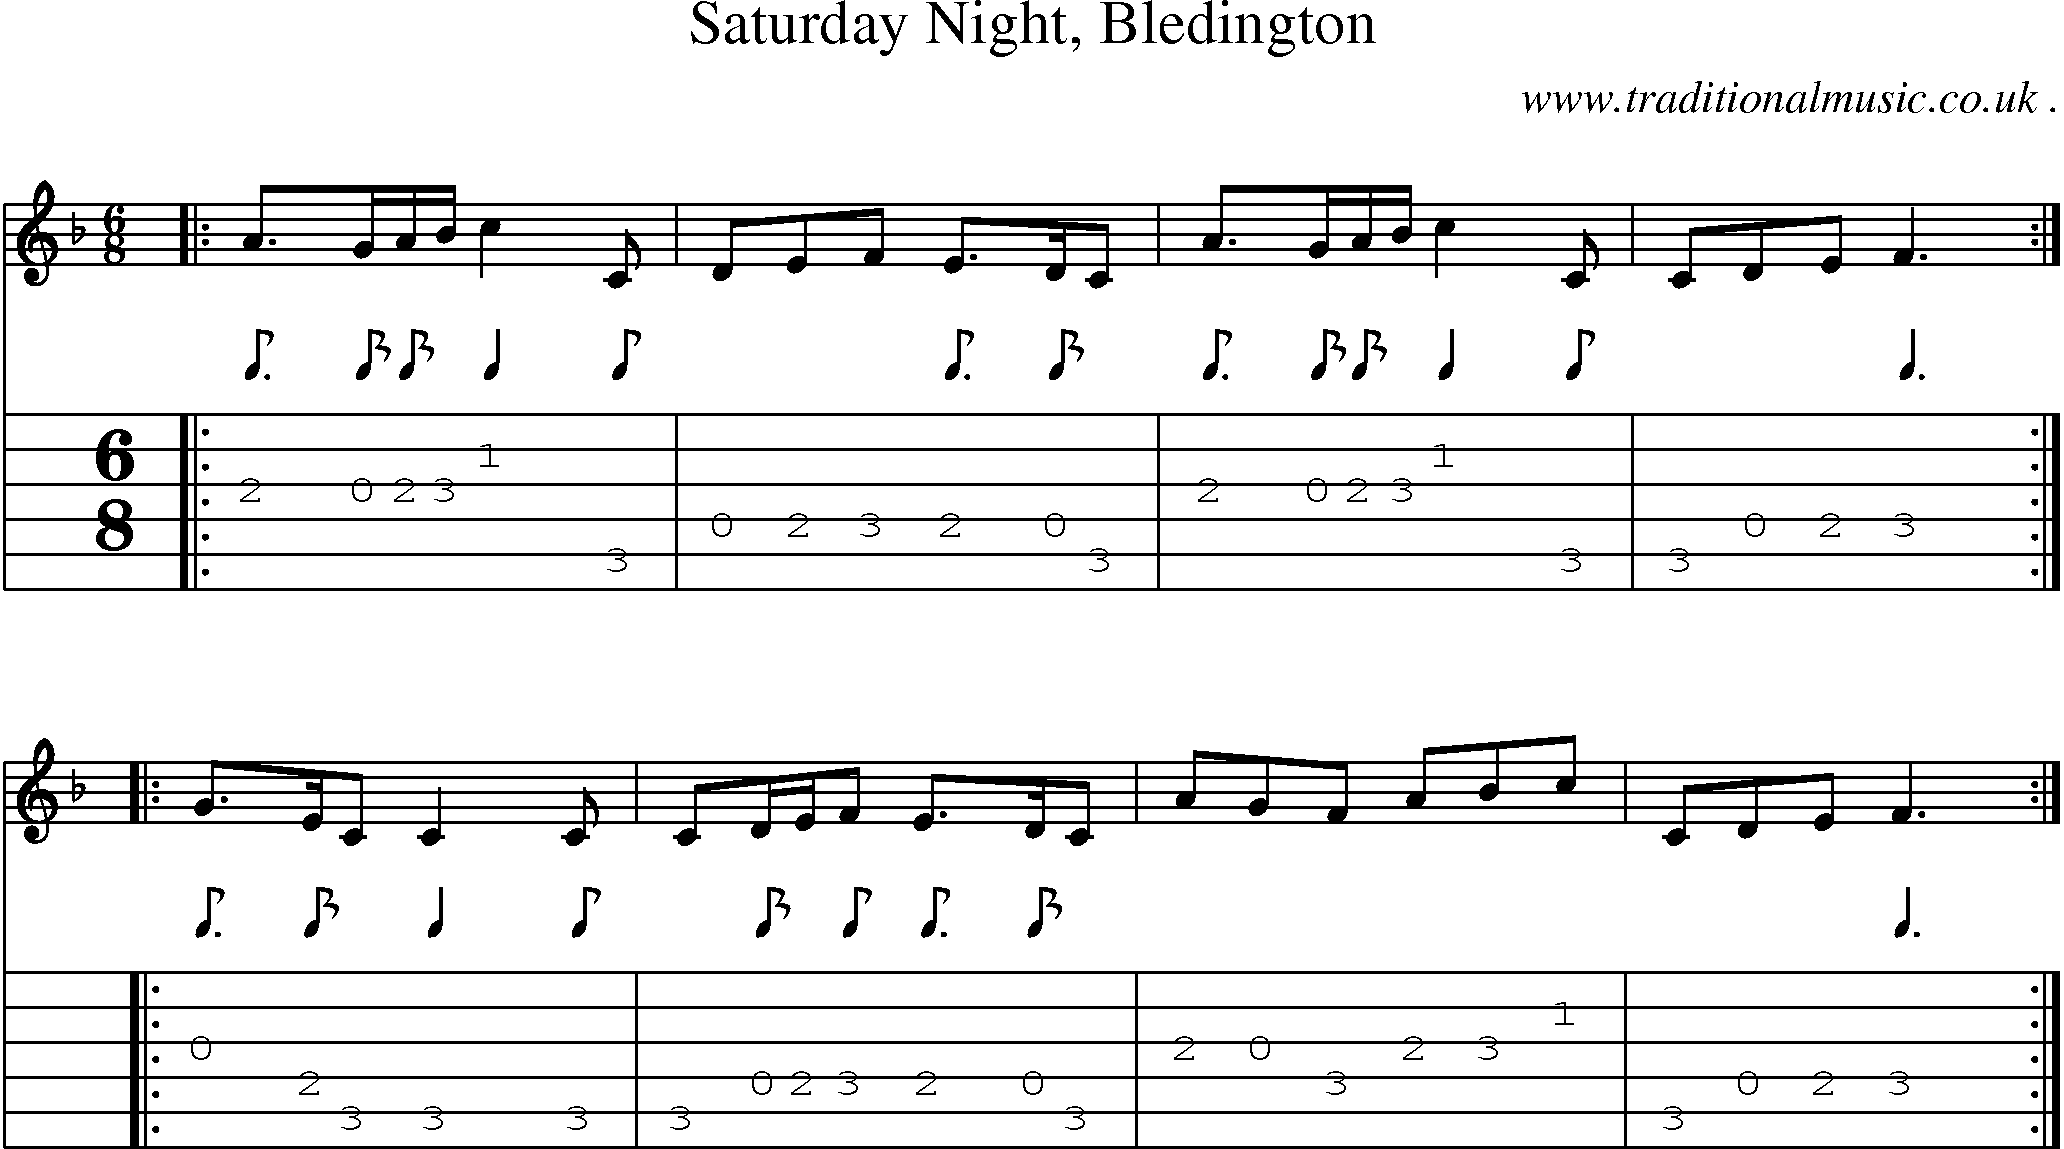 Sheet-Music and Guitar Tabs for Saturday Night Bledington